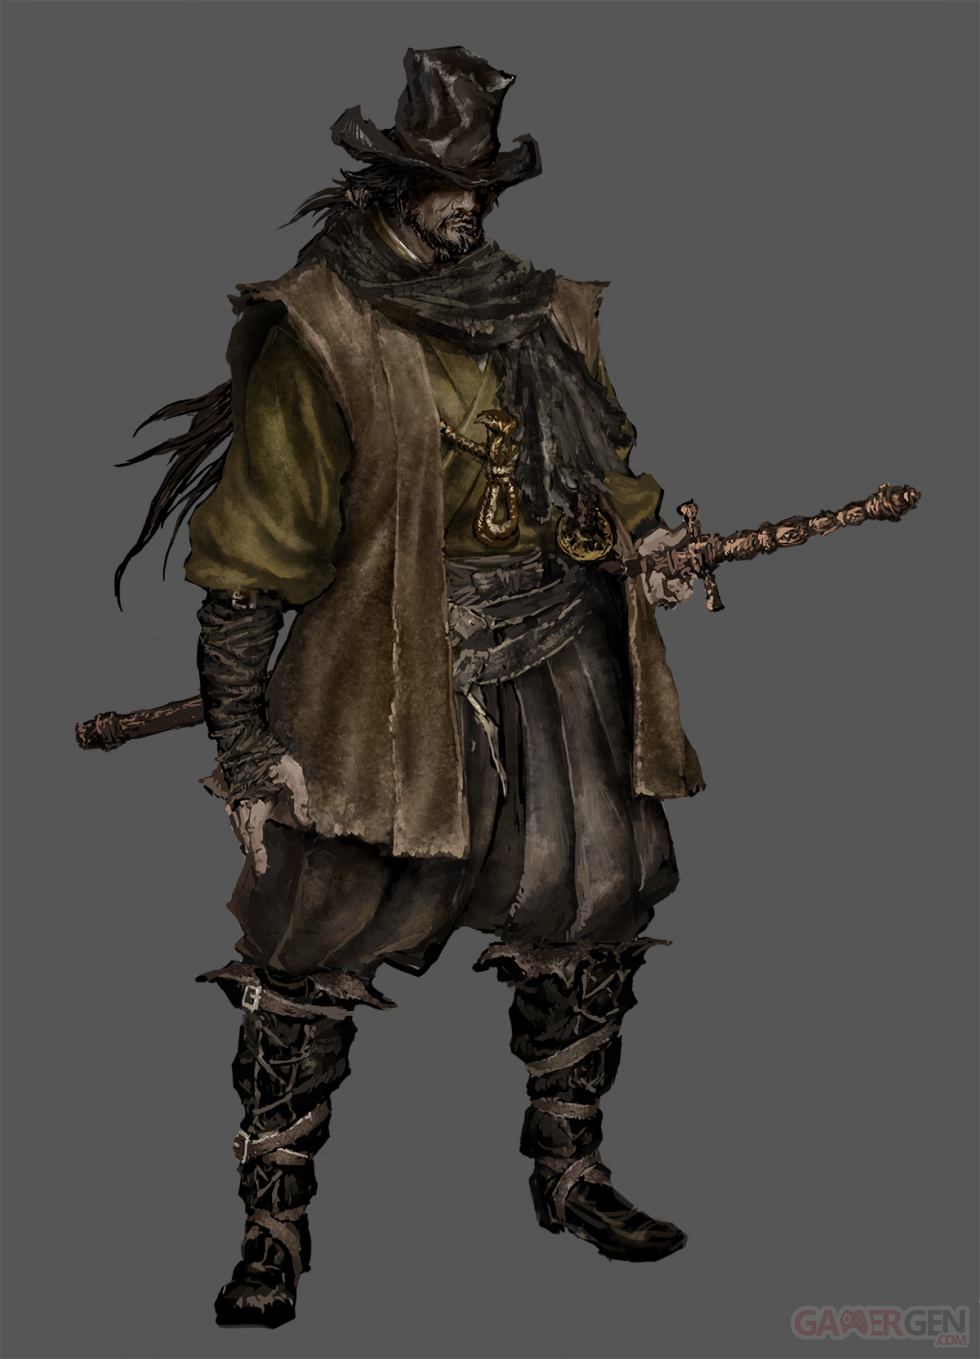 Bloodborne The Old Hunter image screenshot 5